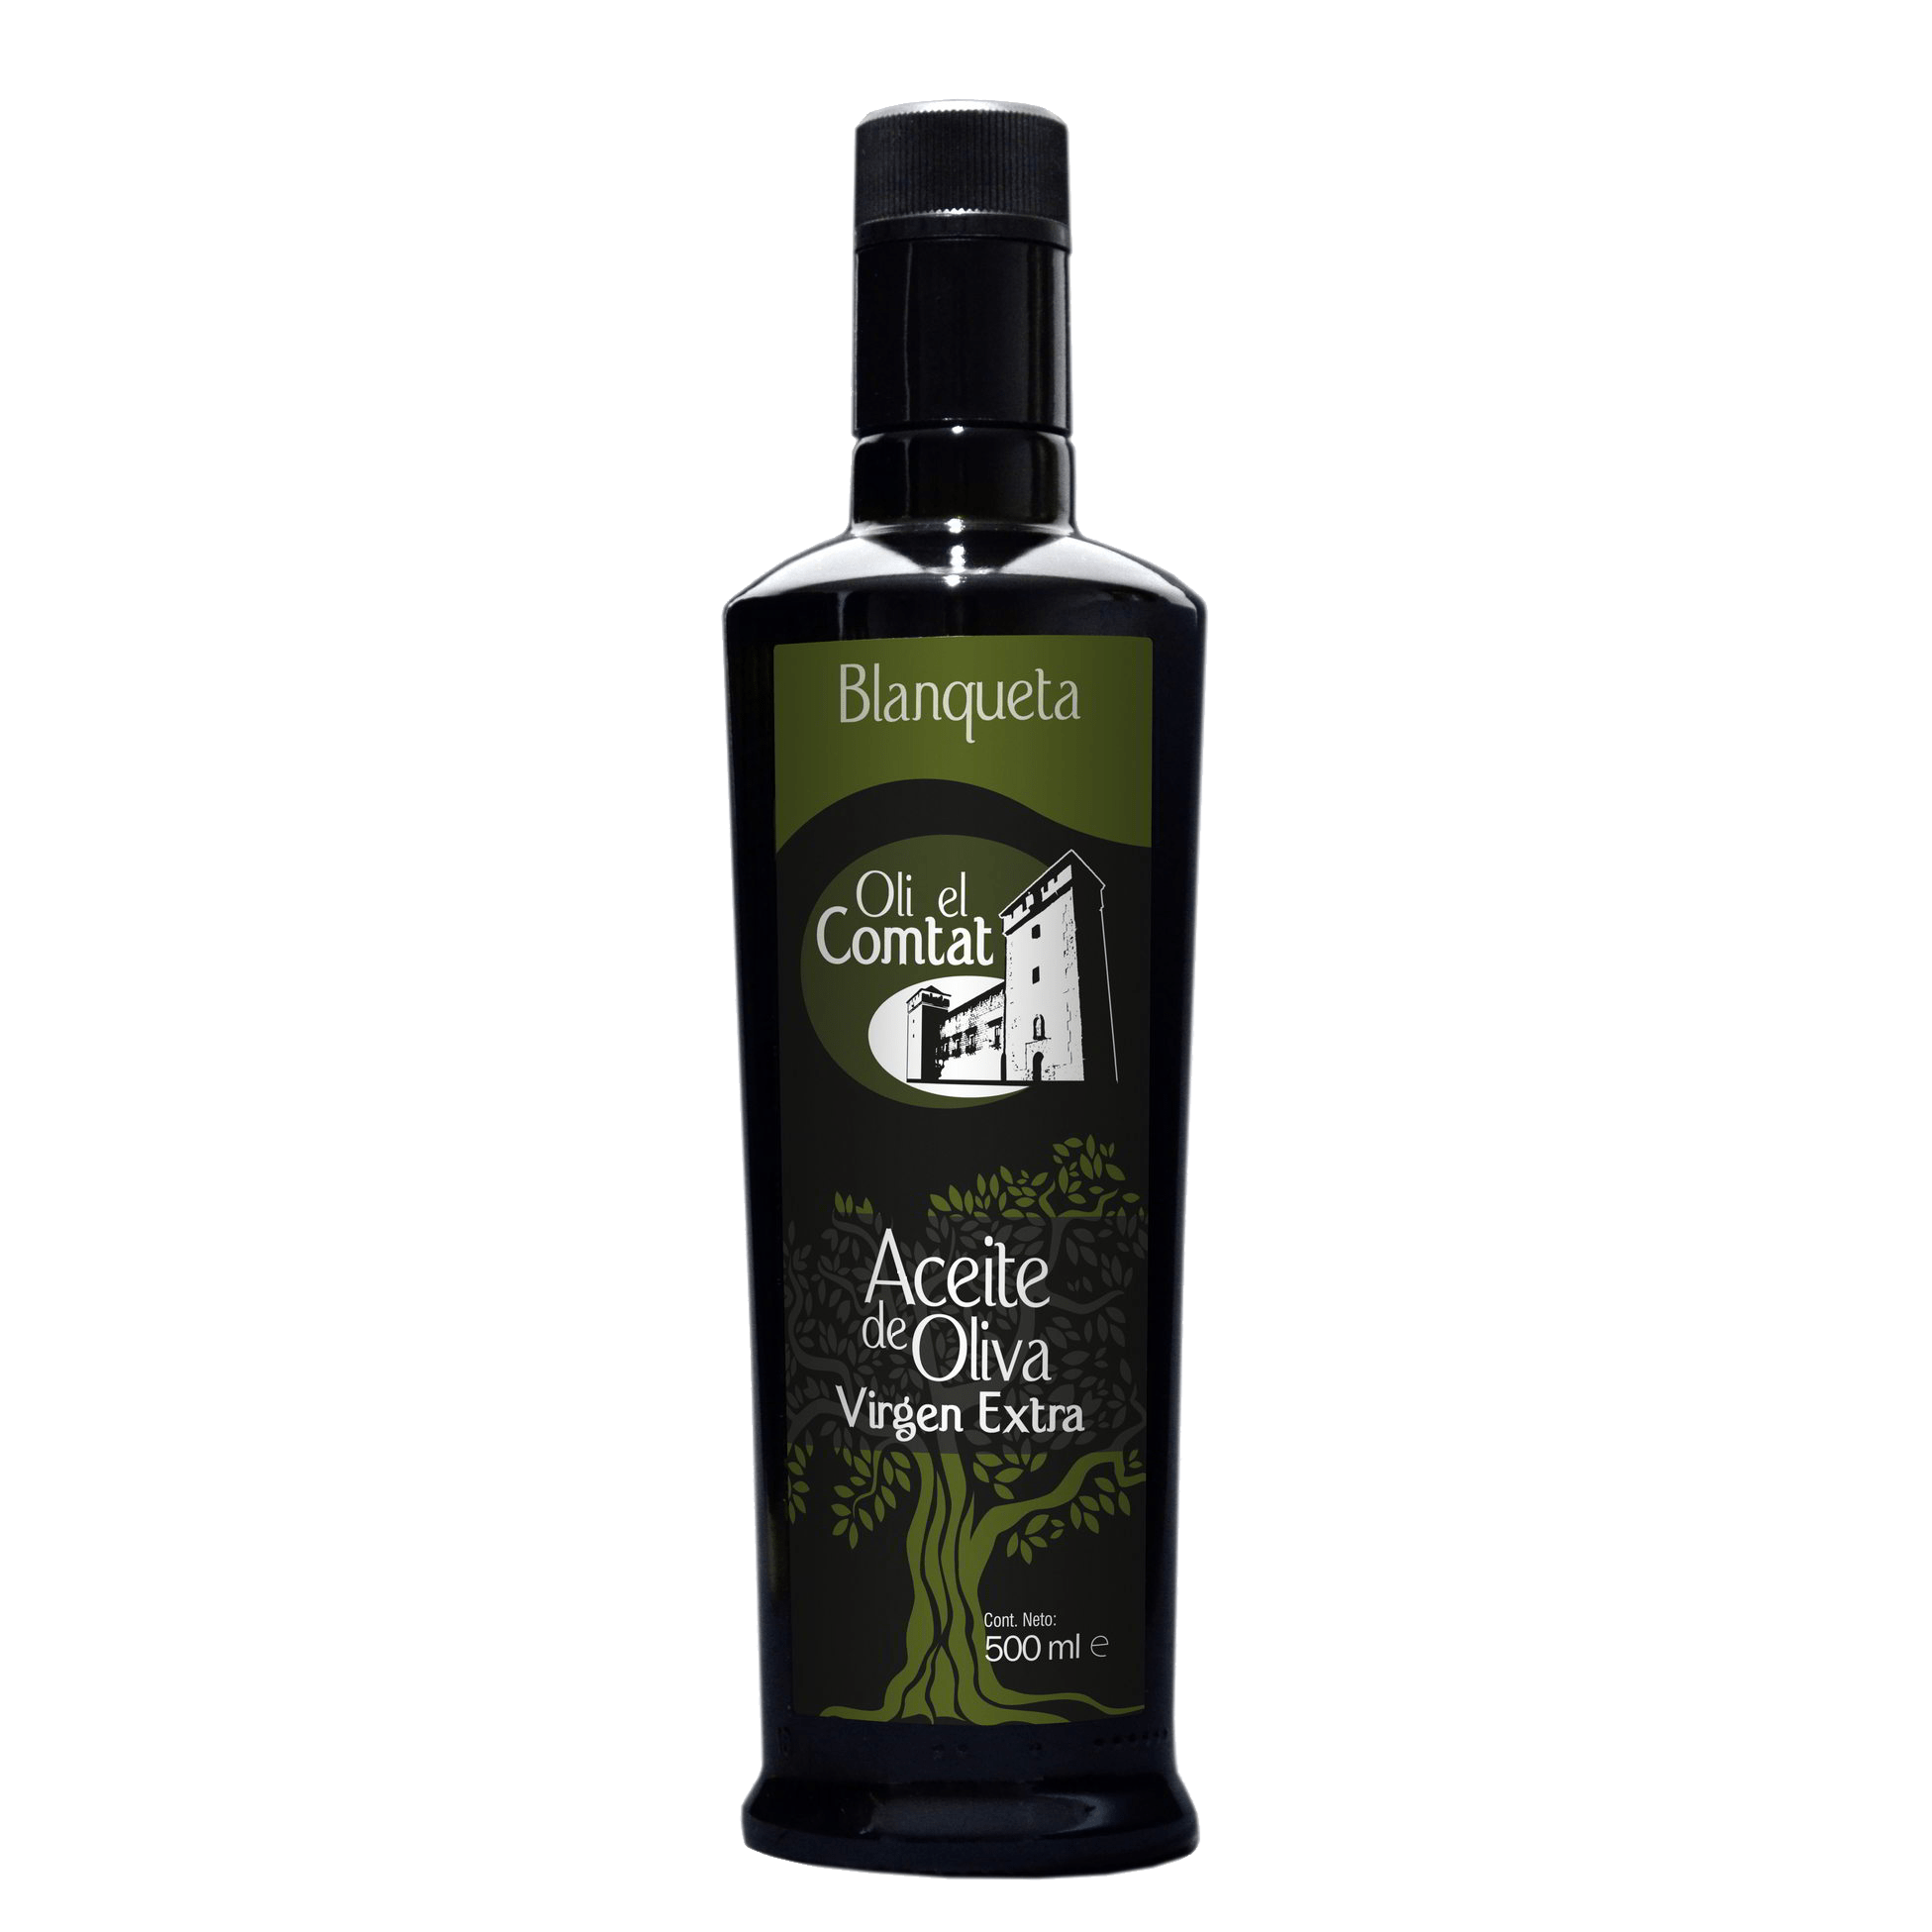 Aceite de oliva virgen extra blanqueta 500ml